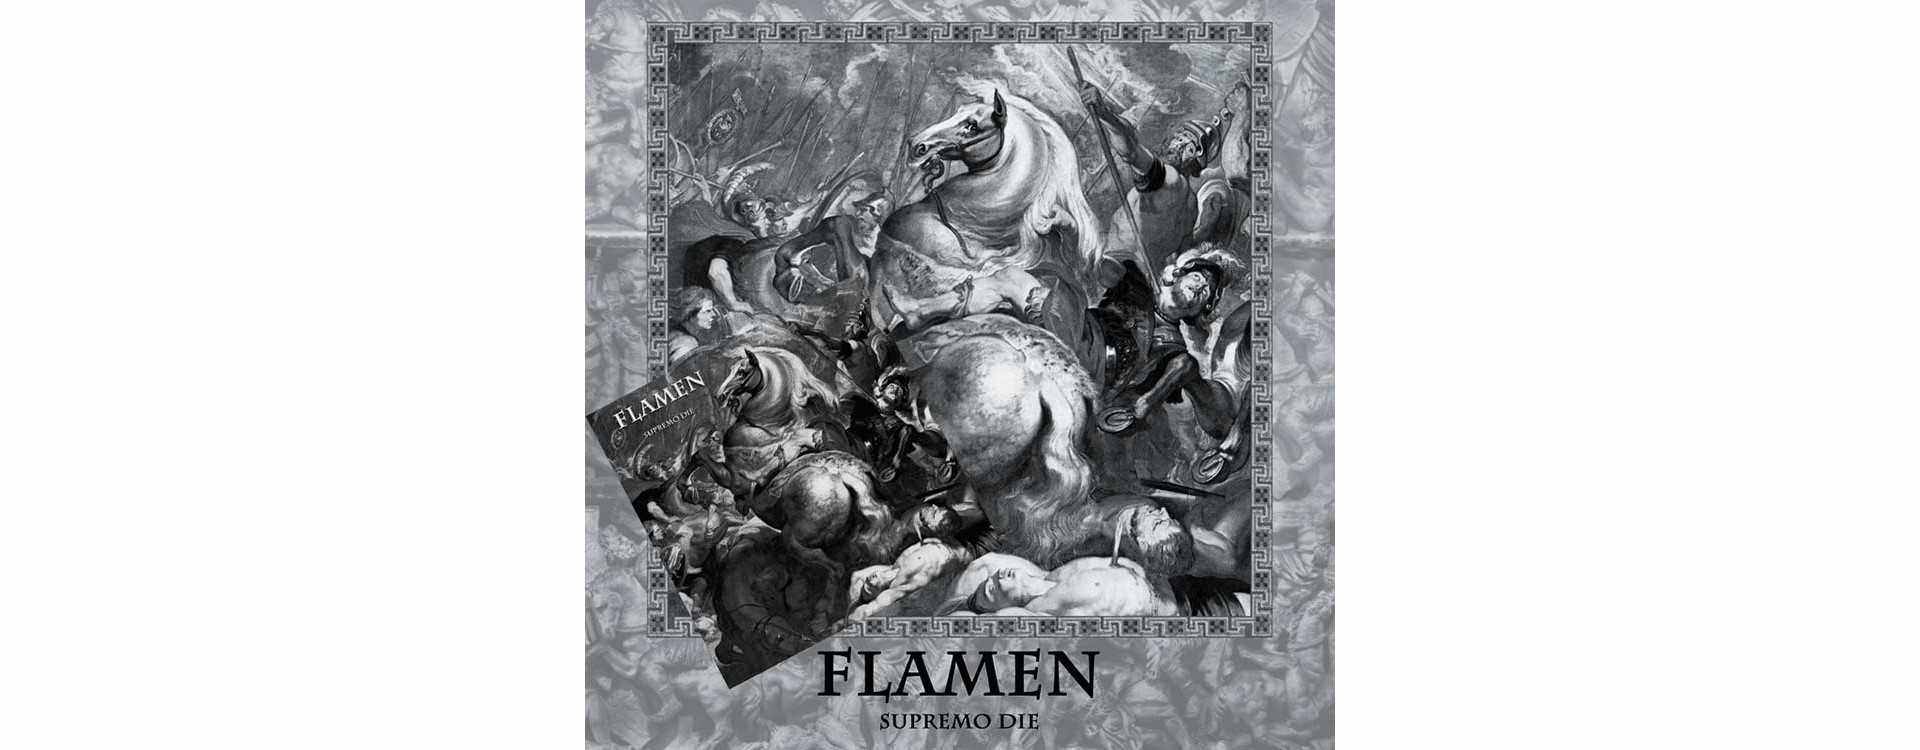 FLAMEN - SUPREMO DIE - Hass Weg Productions image 1